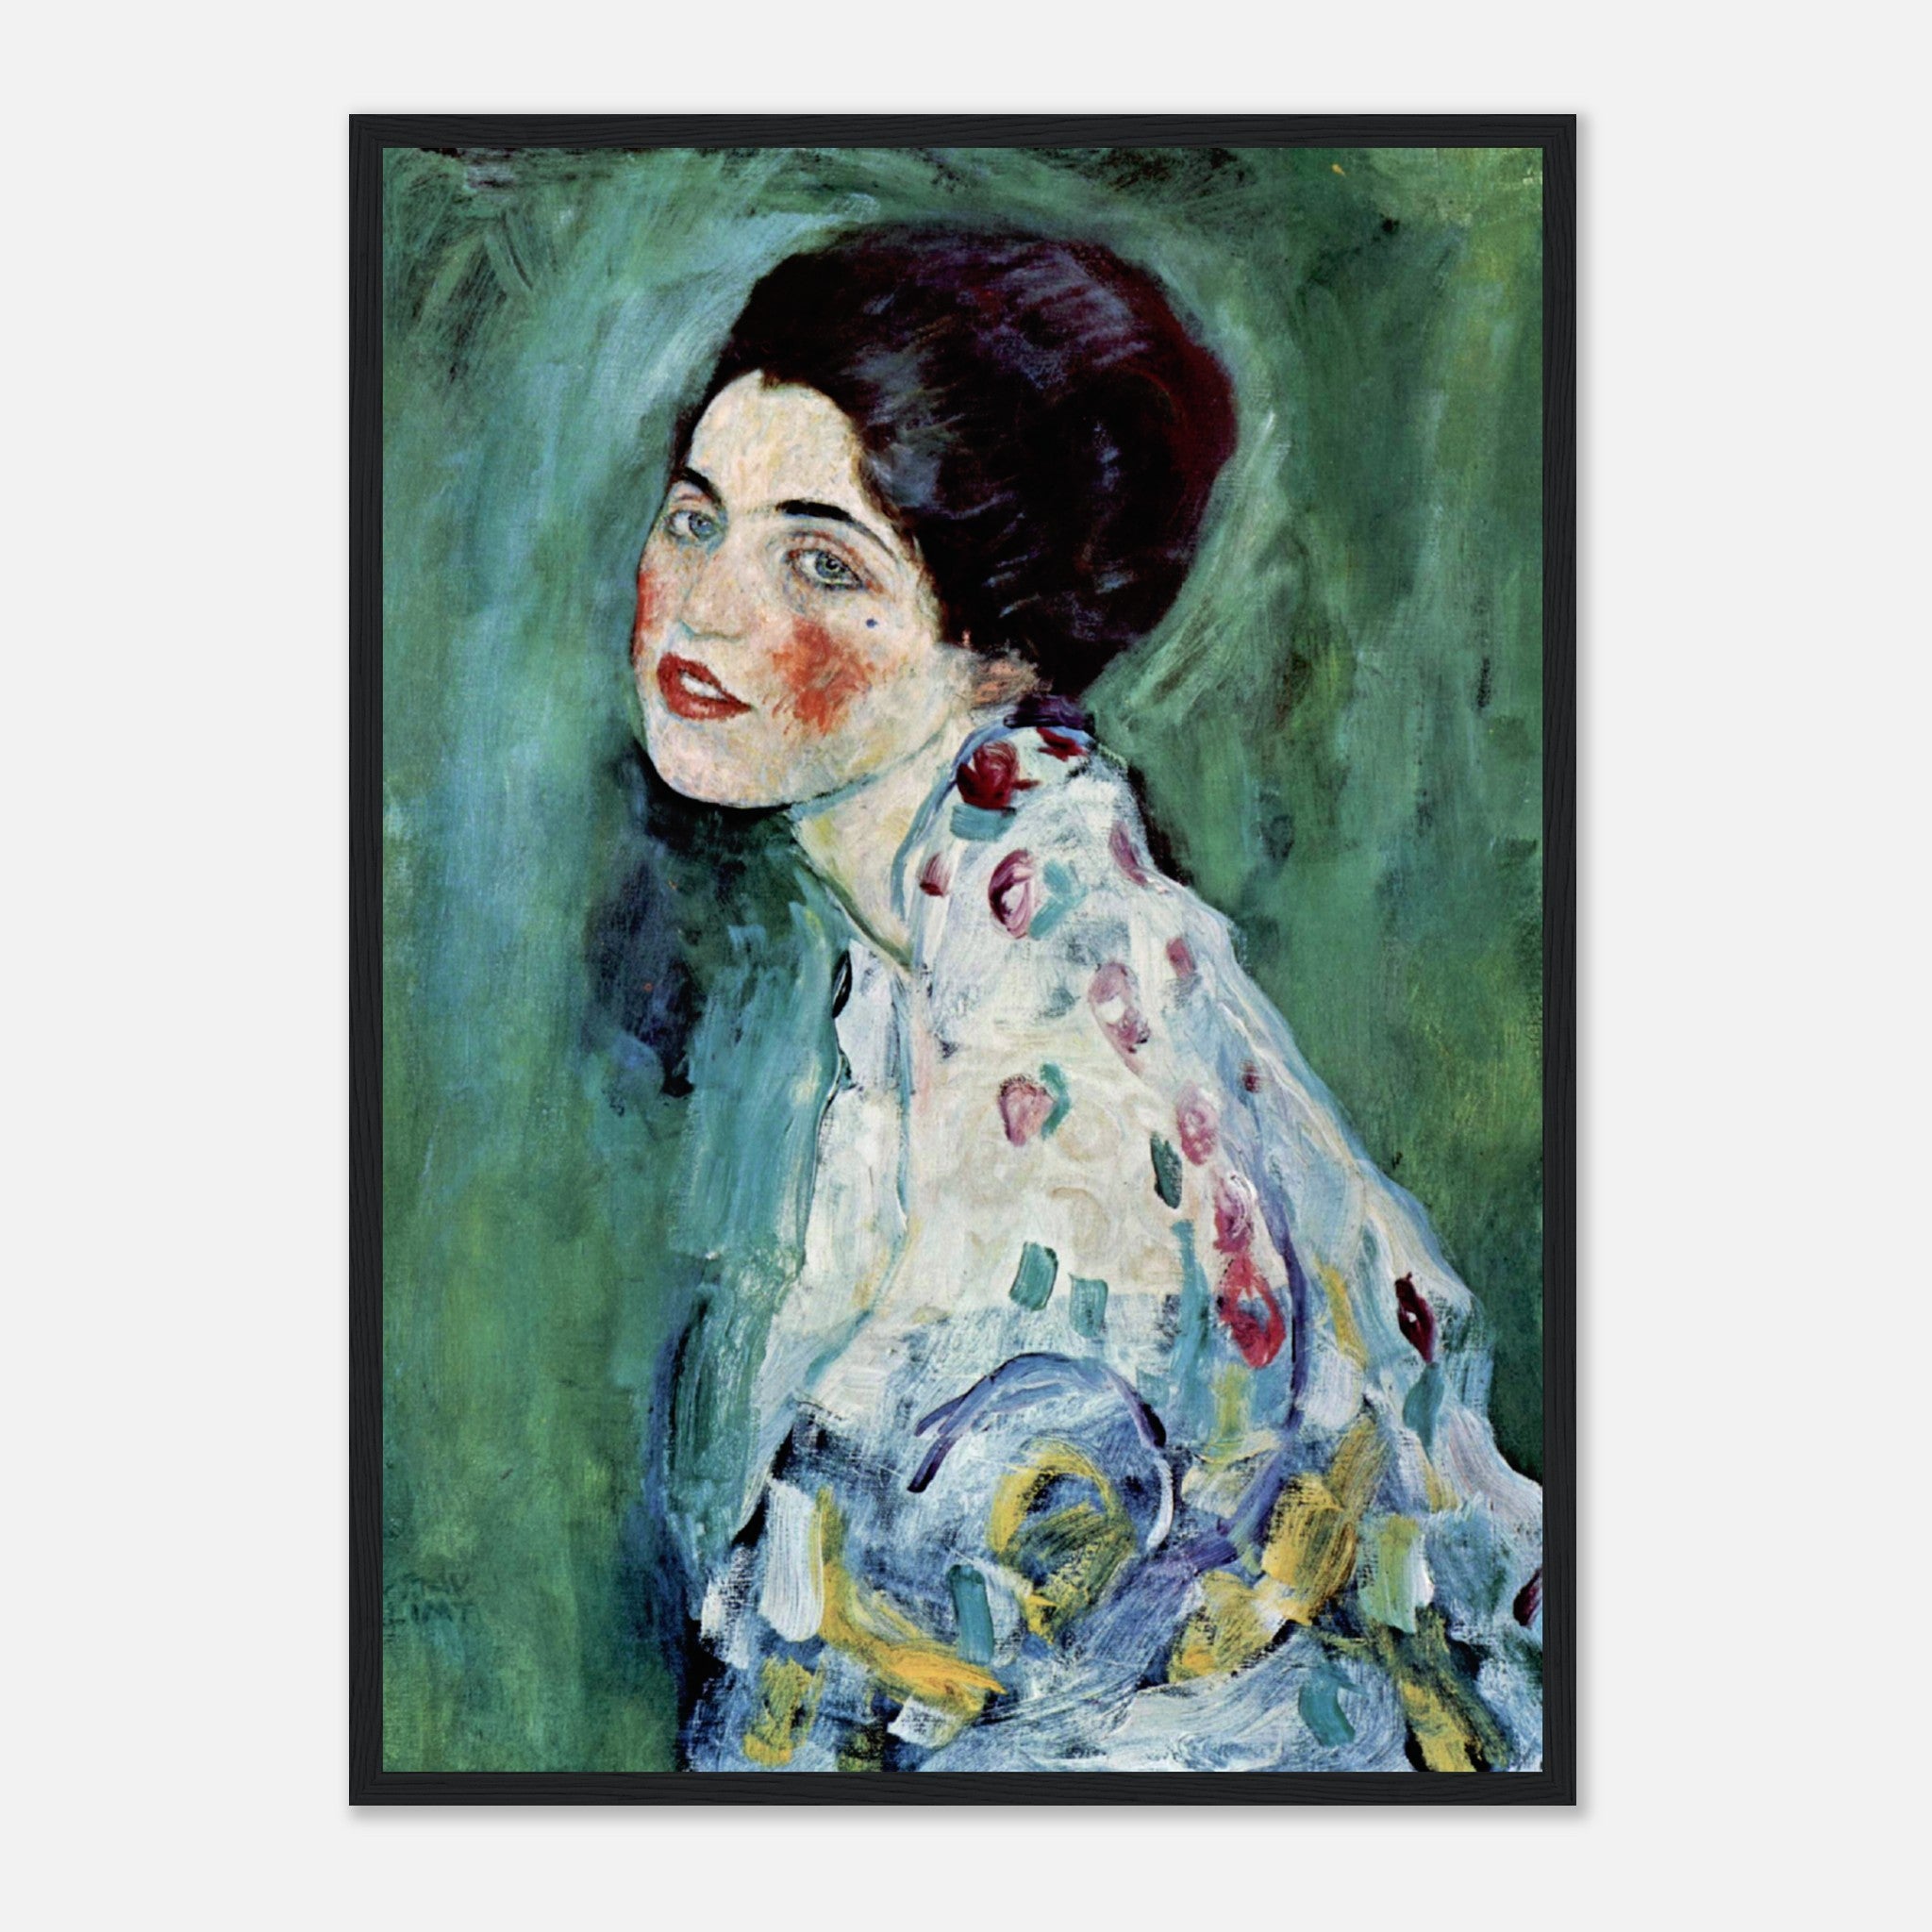 Gustav Klimts Porträteiner Dame (1916-1917) Póster